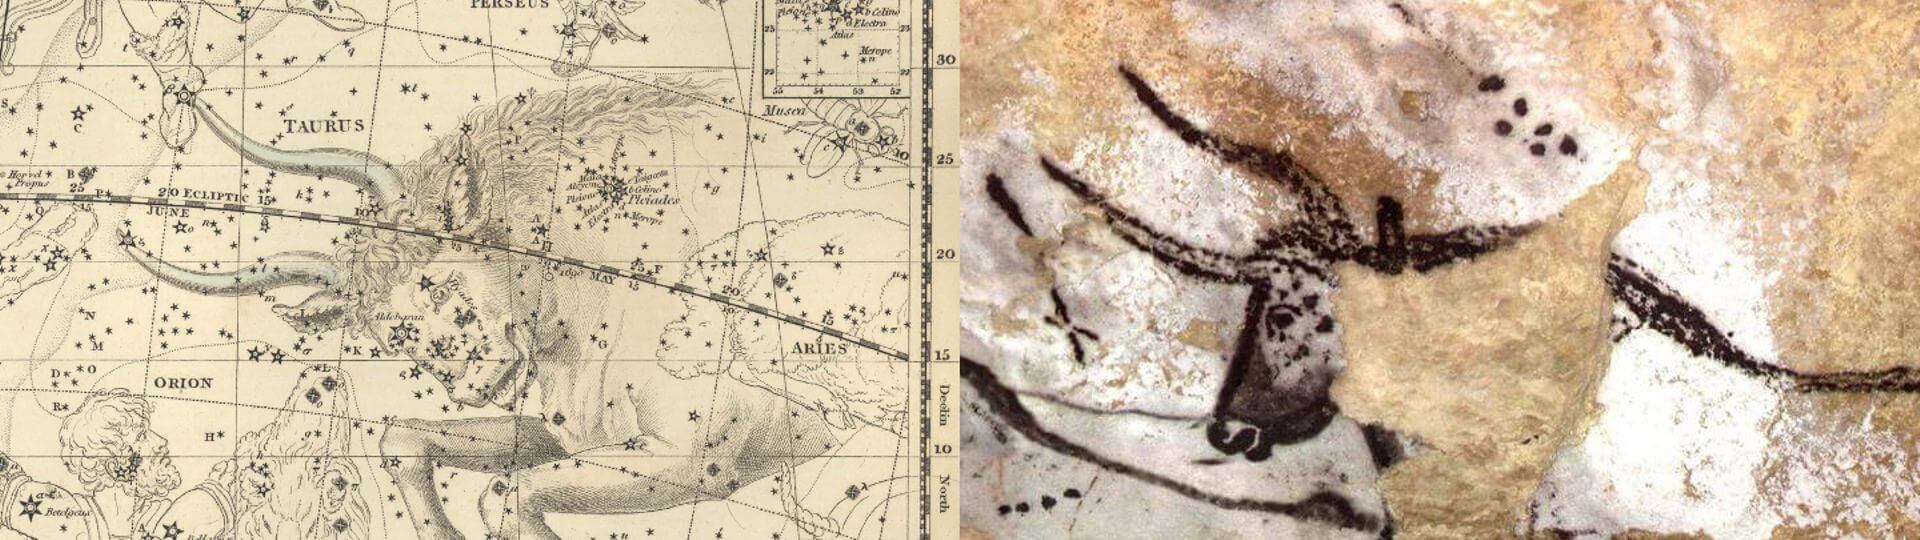 astronomia paleolitico celestial atlas alexander jamieson 1822 toro lascaux